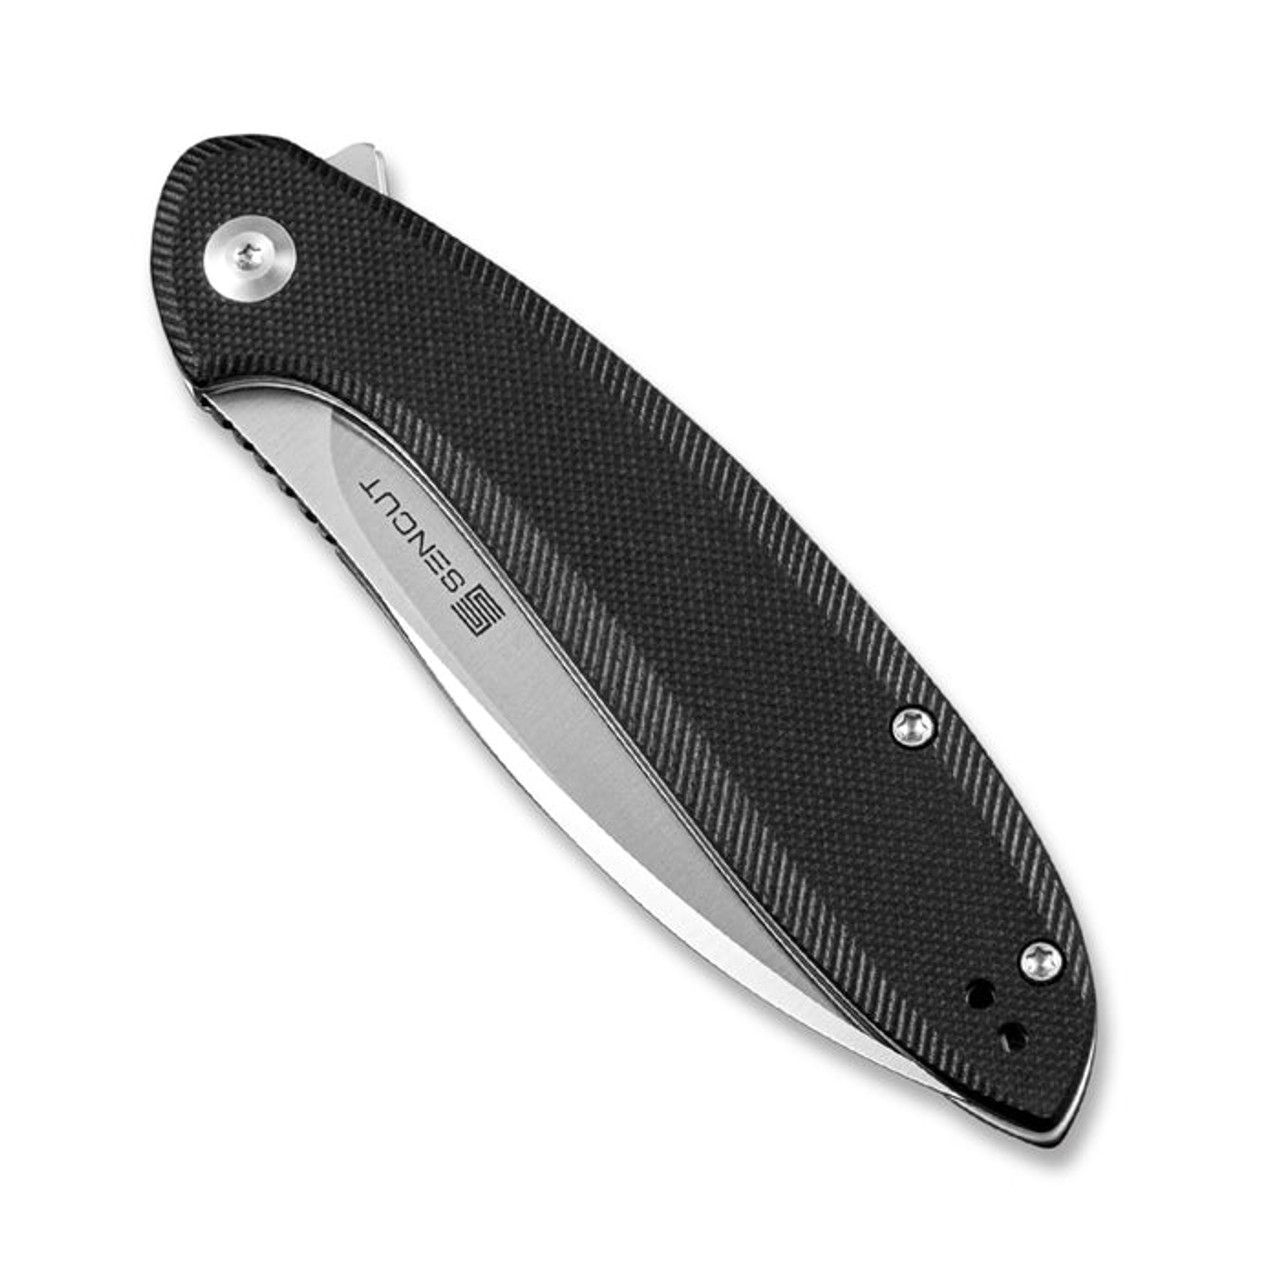 Sencut San Angelo Flipper Knife (S21003-1) 3.48" Satin 9Cr18MoV Drop Point Plain Blade, Black G-10 Handle